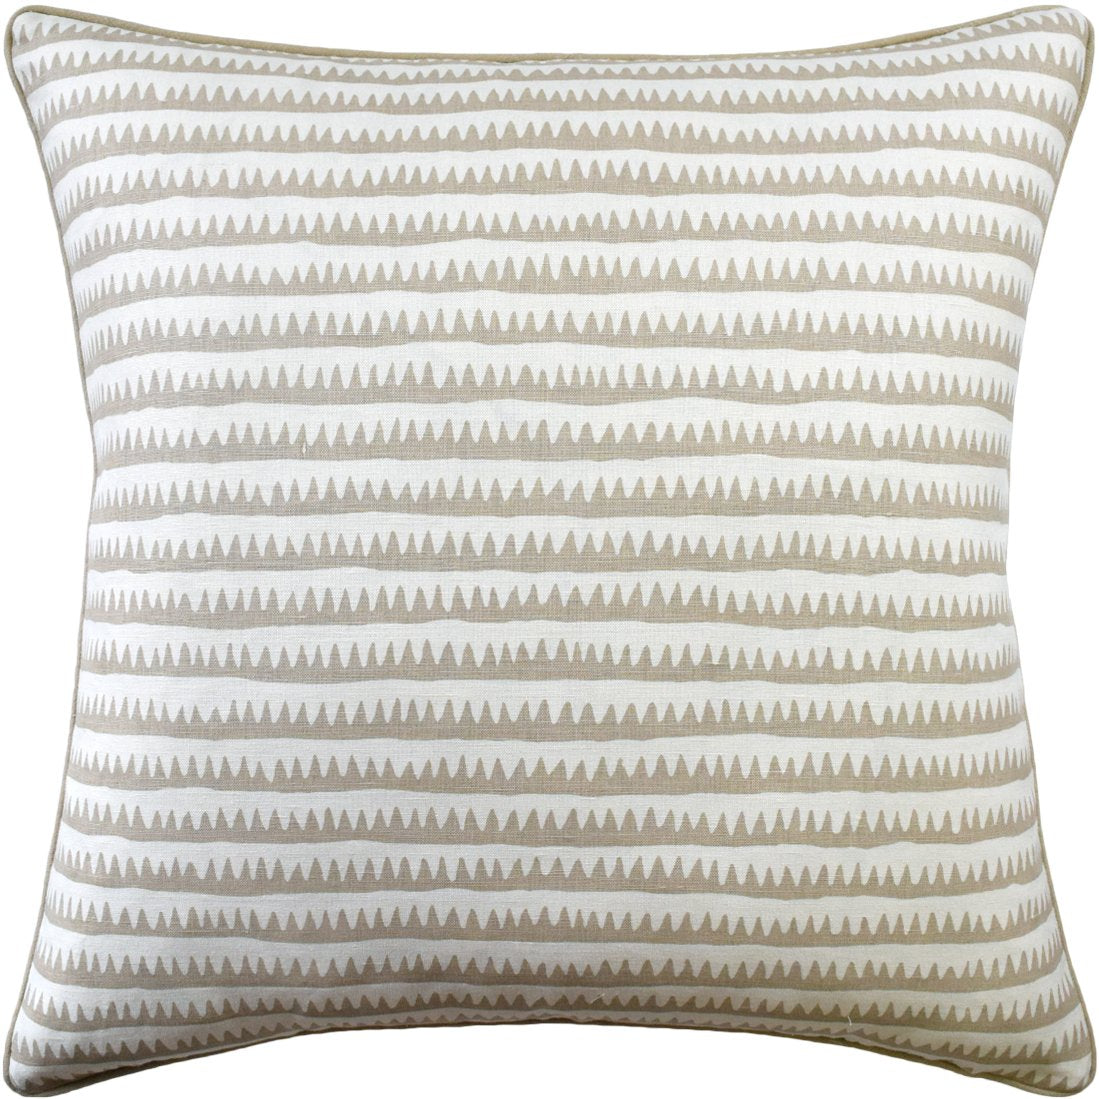 20x20 Sand Corfu Stripe Pillow | Neutral Ryan Studio Pillows at Fig Linens